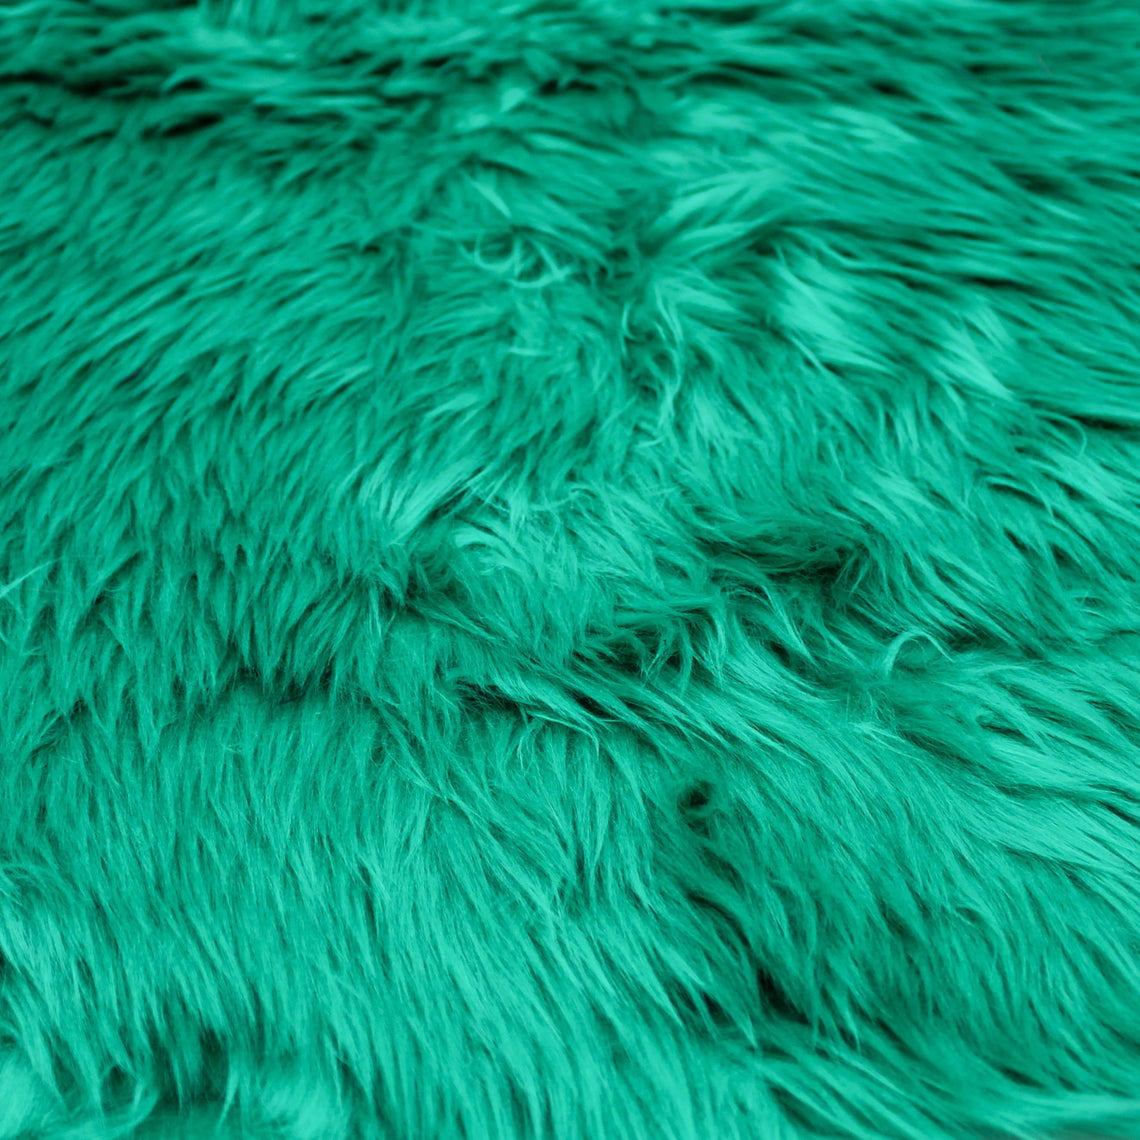 RED/EMERALD/GOLD STRIPE LONG Pile Fun Faux Fur Fabric Material 